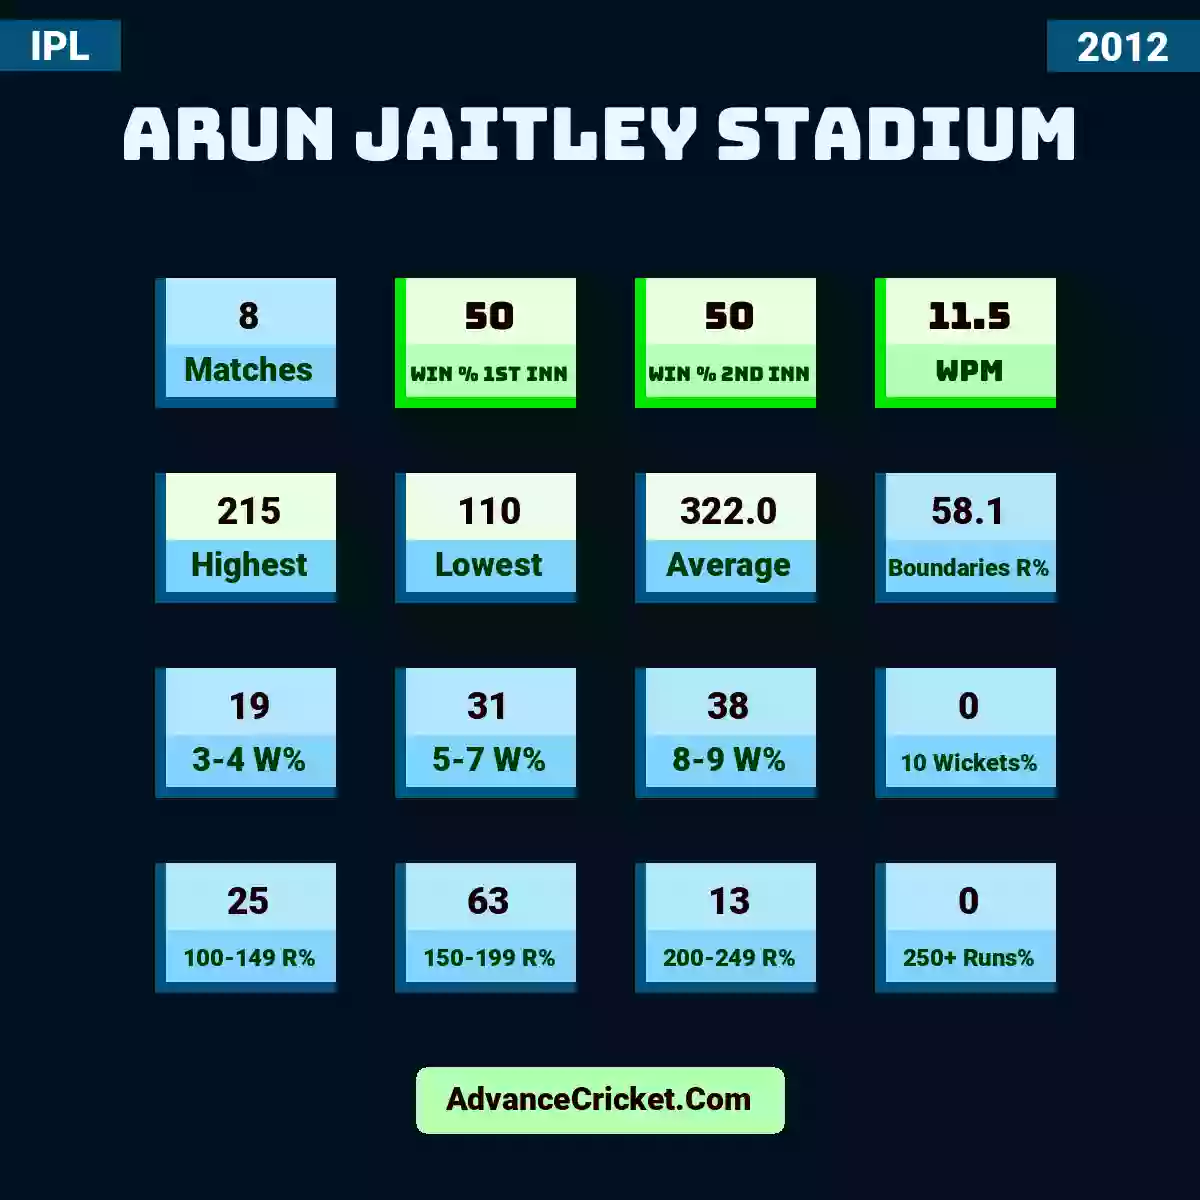 Image showing Arun Jaitley Stadium with Matches: 8, Win % 1st Inn: 50, Win % 2nd Inn: 50, WPM: 11.5, Highest: 215, Lowest: 110, Average: 322.0, Boundaries R%: 58.1, 3-4 W%: 19, 5-7 W%: 31, 8-9 W%: 38, 10 Wickets%: 0, 100-149 R%: 25, 150-199 R%: 63, 200-249 R%: 13, 250+ Runs%: 0.